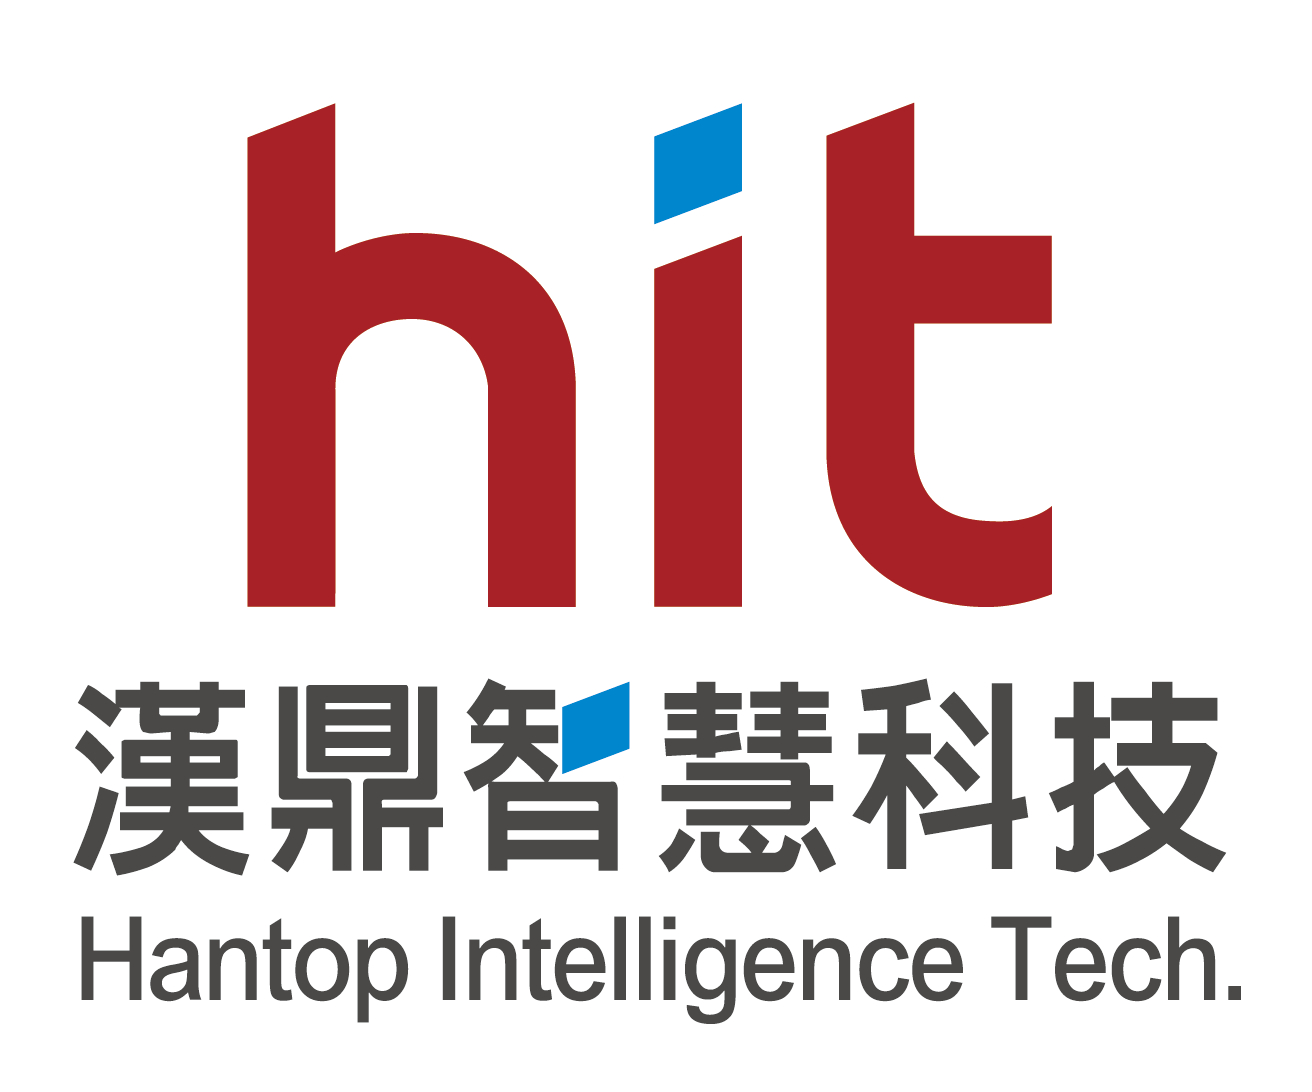 About|HANTOP INTELLIGENCE TECHNOLOGY CO., LTD.